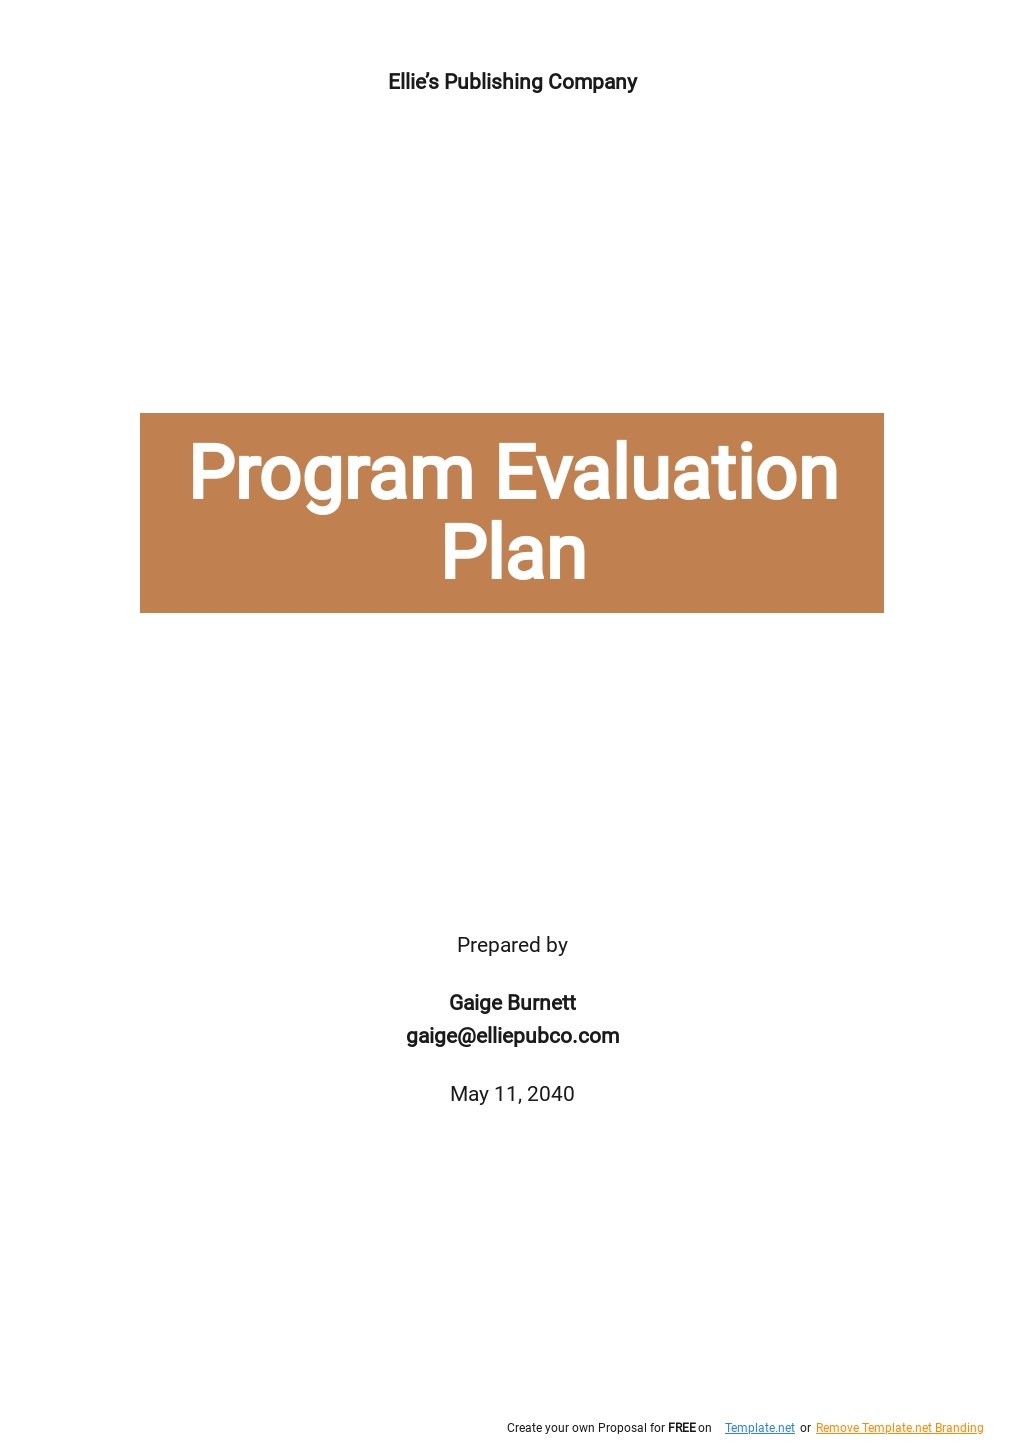 Program Plans 